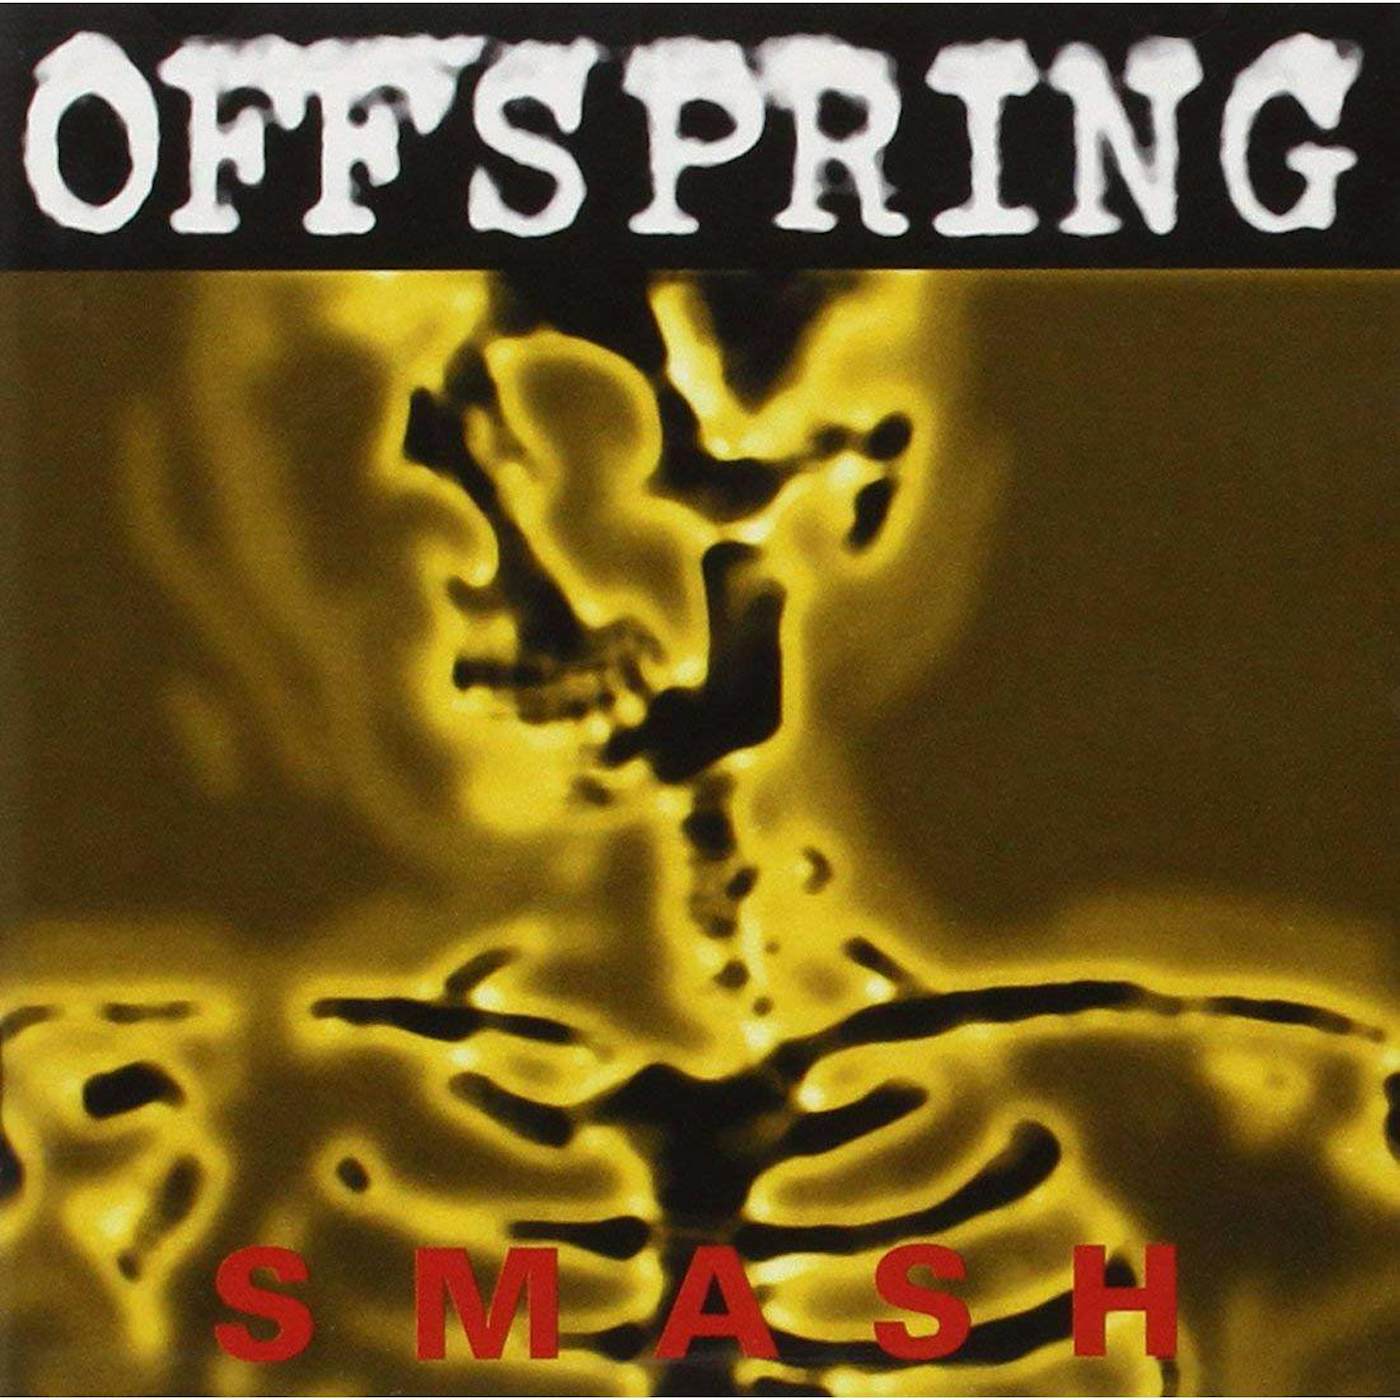 The Offspring Smash Vinyl Record